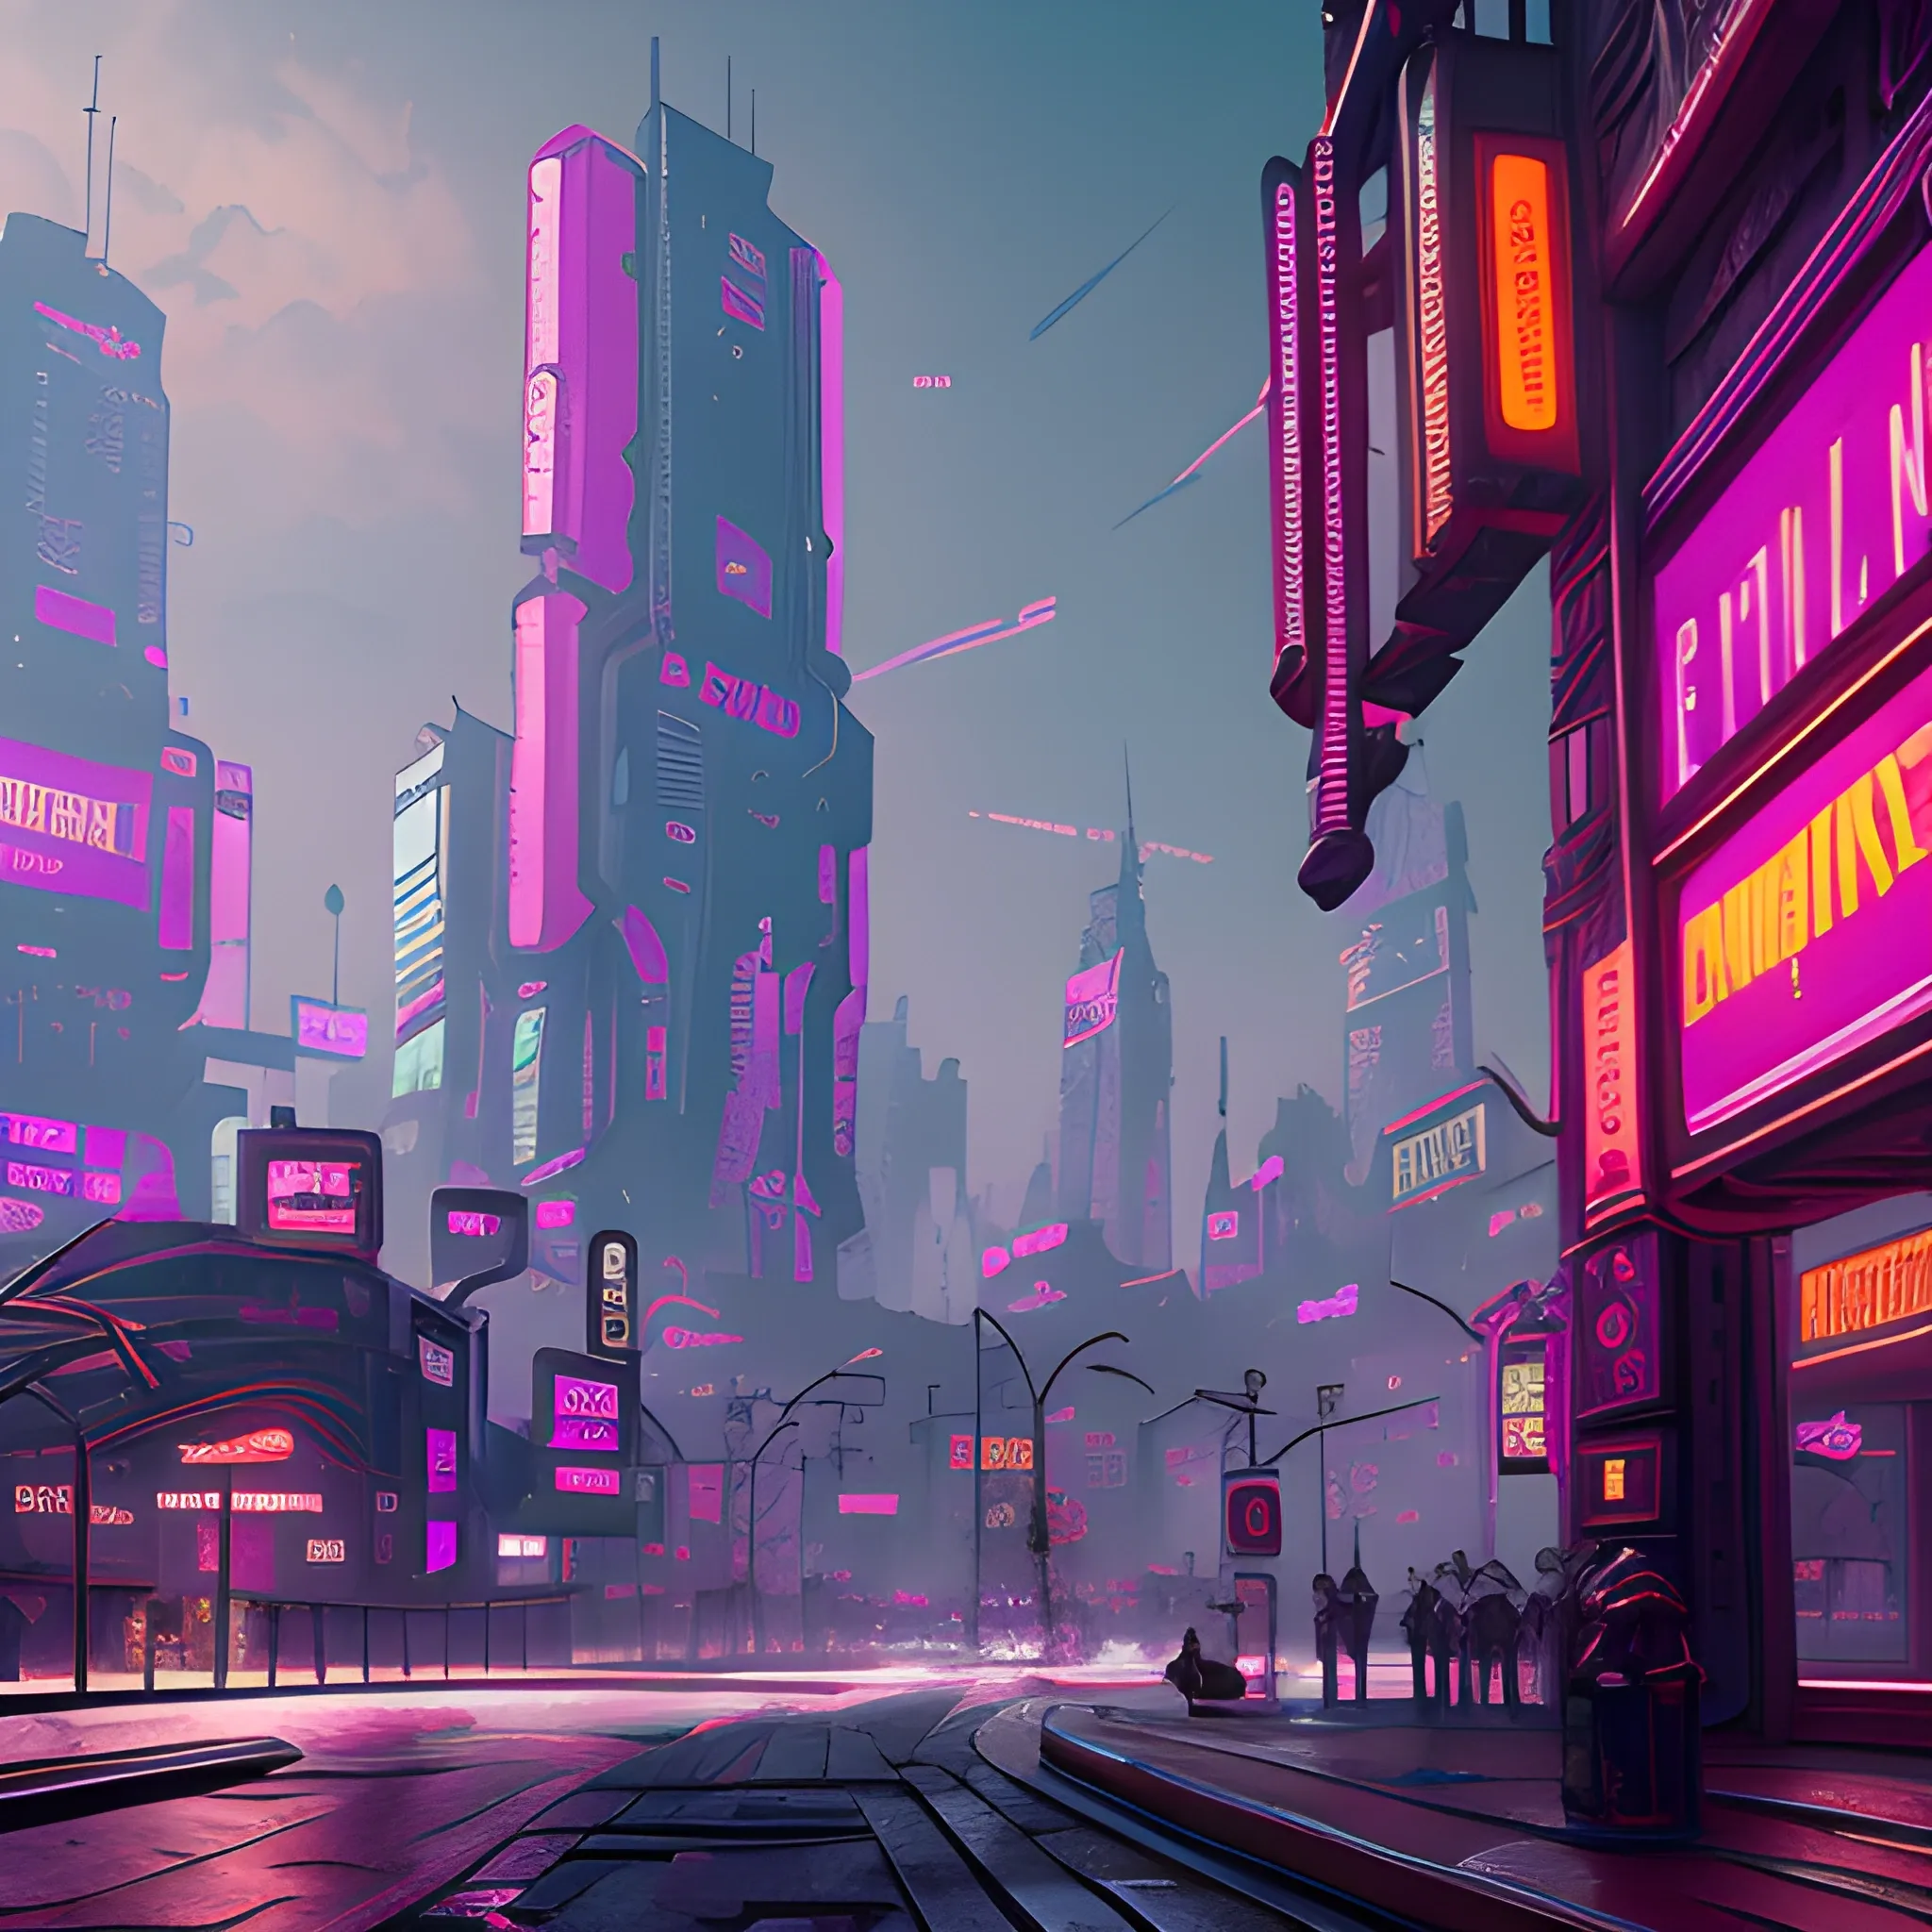 8k, beautiful  city, background of a cyberpunk 2077 Konrad Tomaszkiewicz, purple red color scheme, high key lighting, digital art, highly detailed, fine detail, intricate, ornate, complex